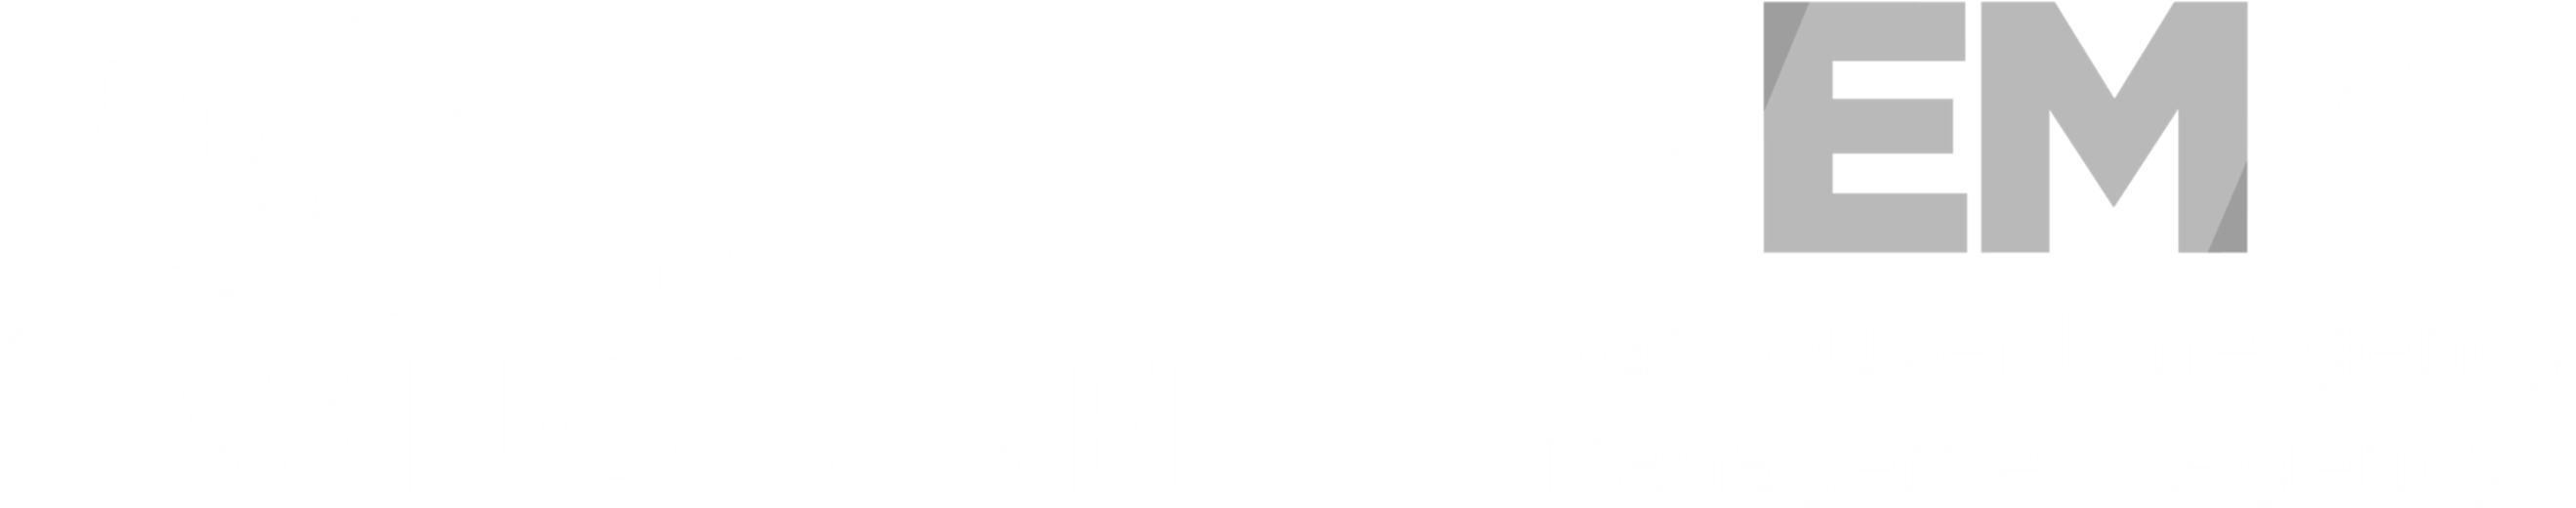 VEMA-COV Grey Logo.png